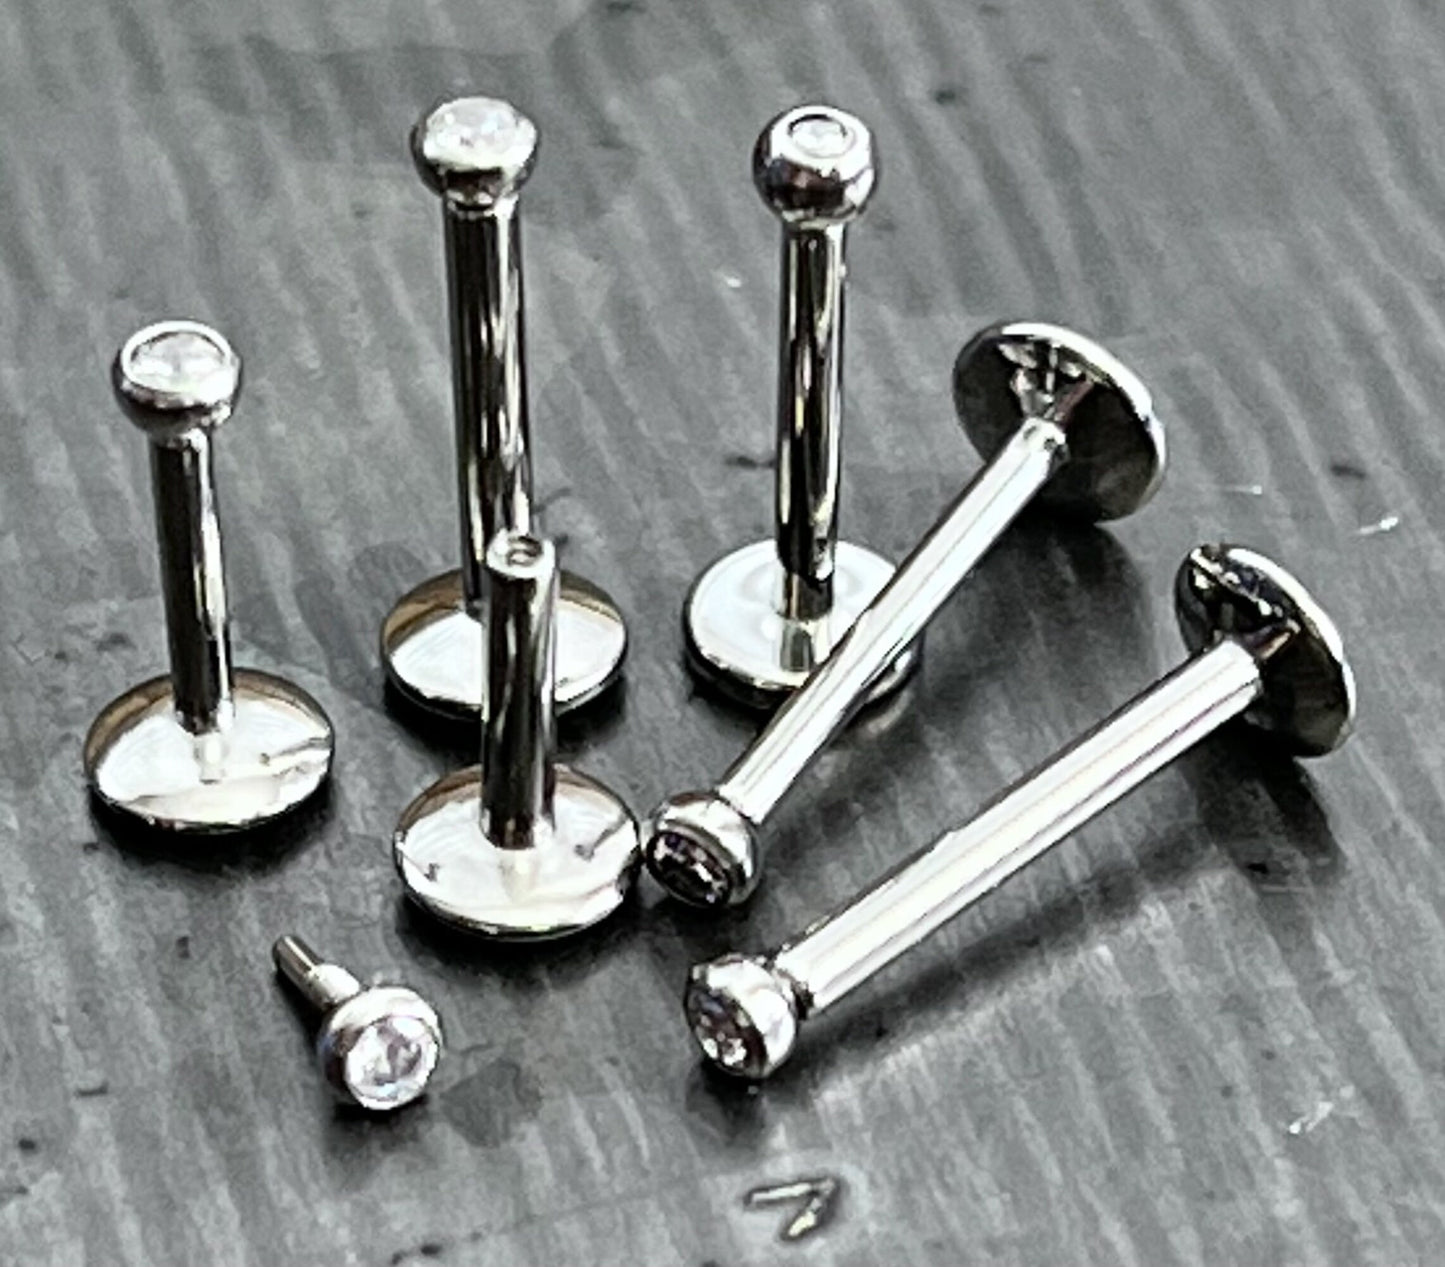 1 Piece of Internally Threaded Solid Titanium Bezel Gem Labret Stud Lip Ring - 16g or 18g - Gem Size: 2 or 3mm - Lengths - 6mm, 8mm or 10mm!